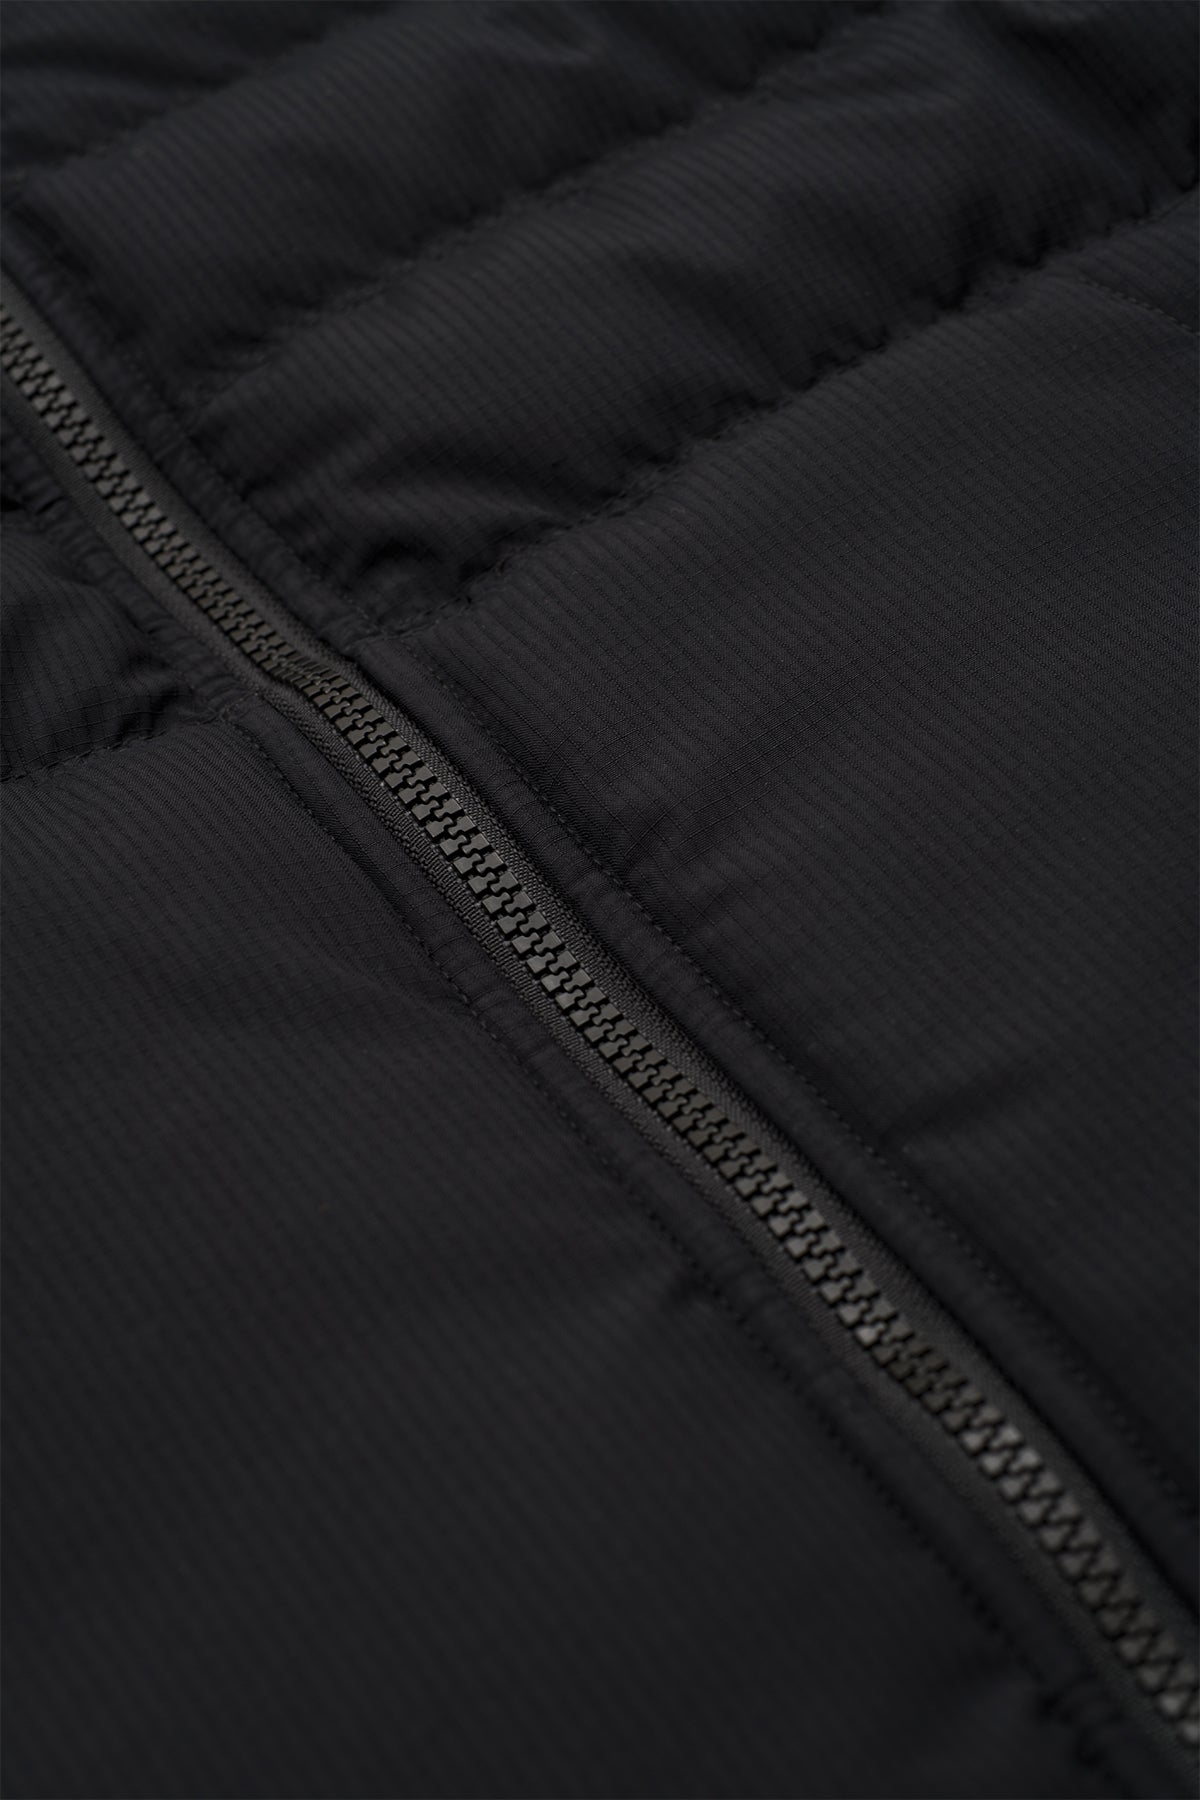 front zipper detail of Black Globe Prime Down Jacket